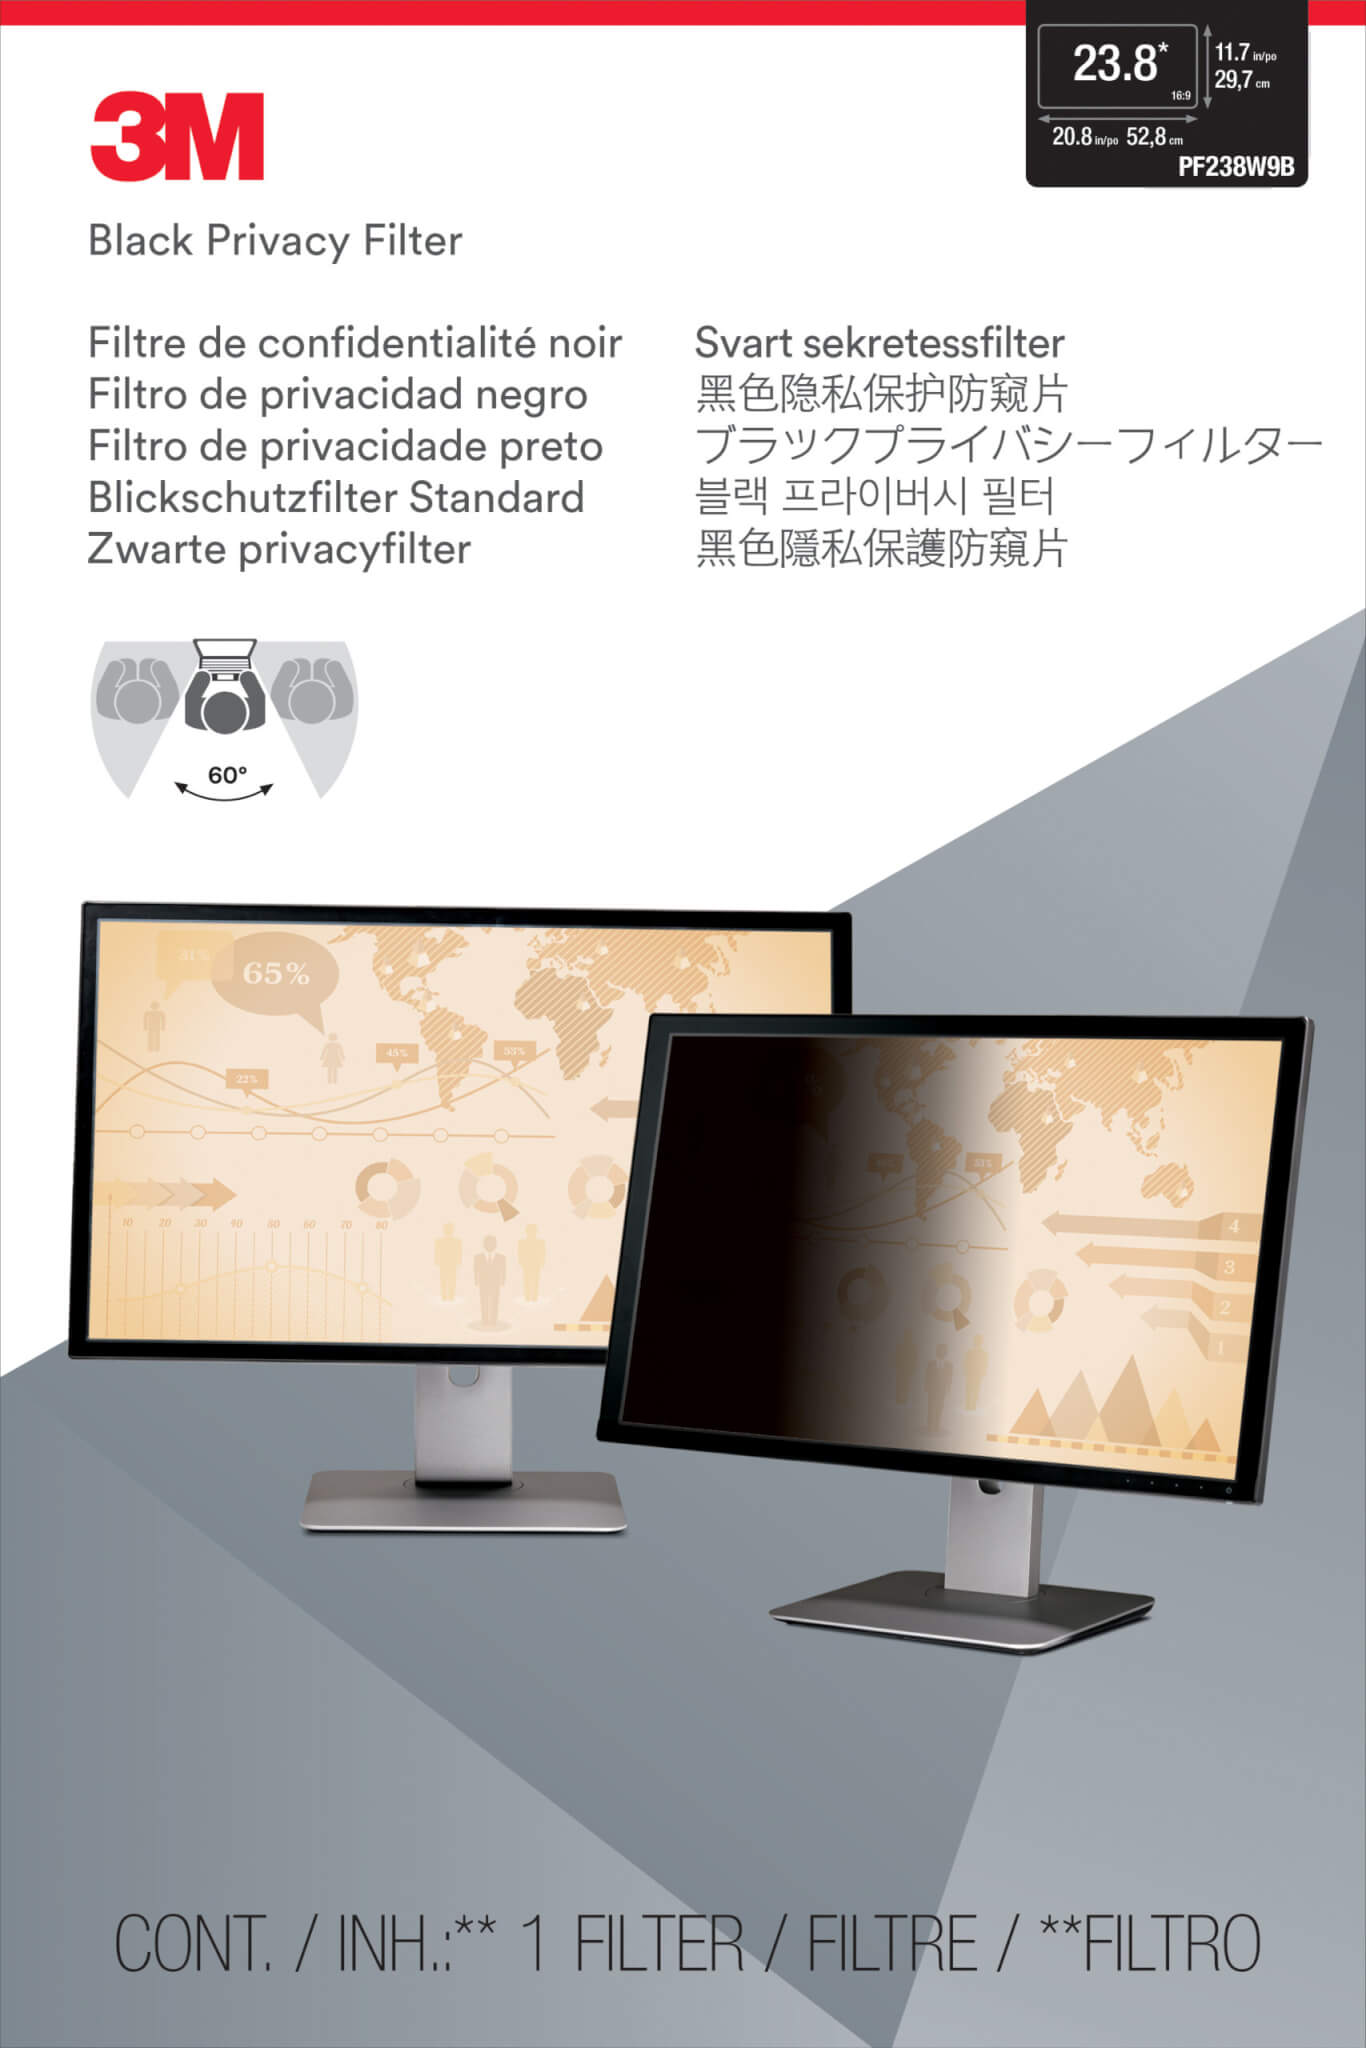 מגן פרטיות למסך רחב - 3M™ | 98044059321 | PF238W9B | Privacy Filter for 23.8 Widescreen Monitor